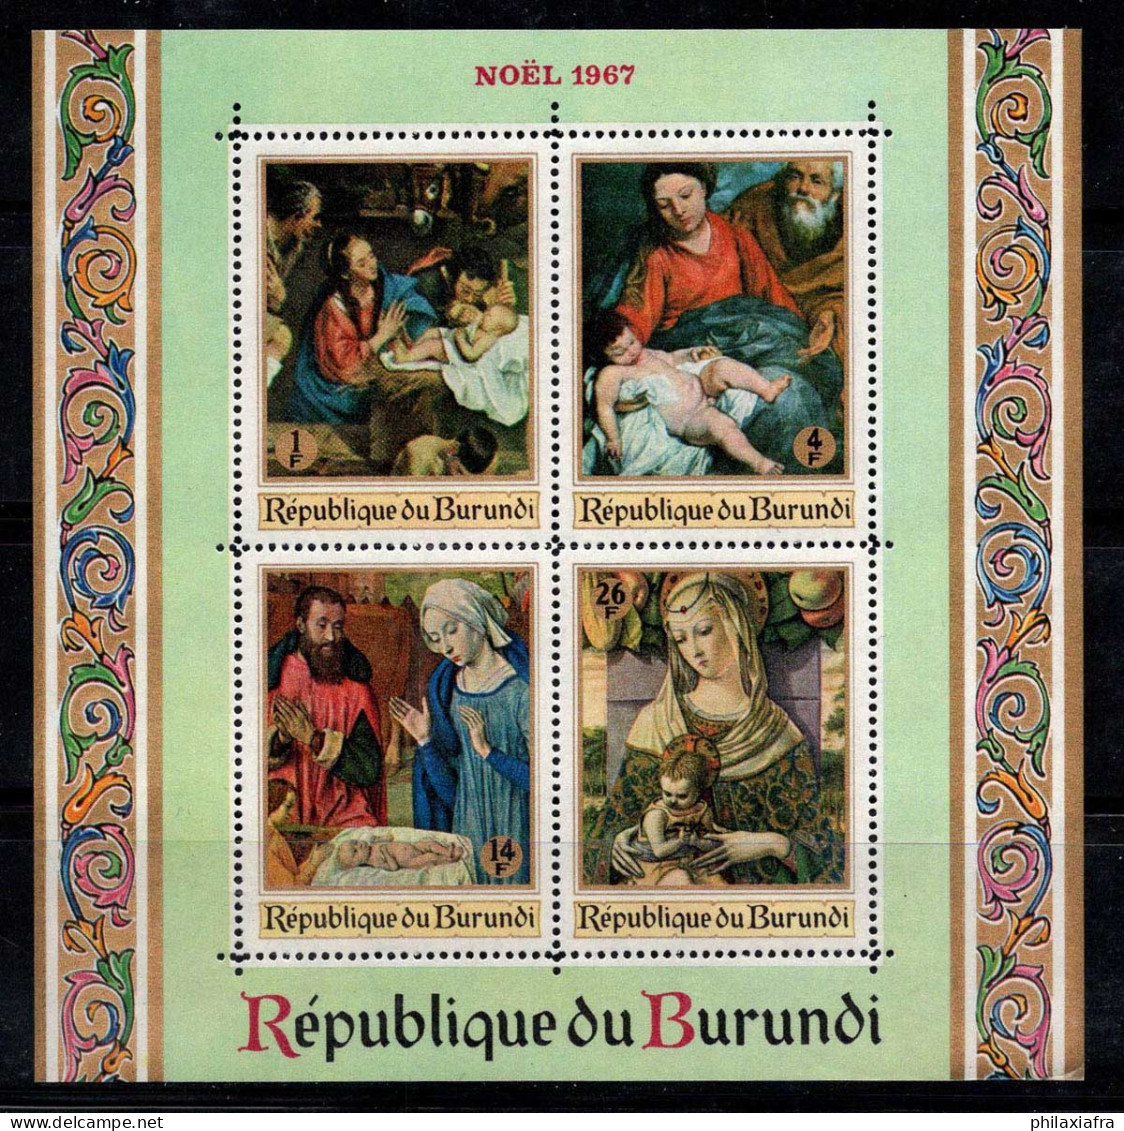 Burundi 1967 SG MS337 Bloc Feuillet 100% Neuf ** Noël, Peintures Religieuses - Nuovi